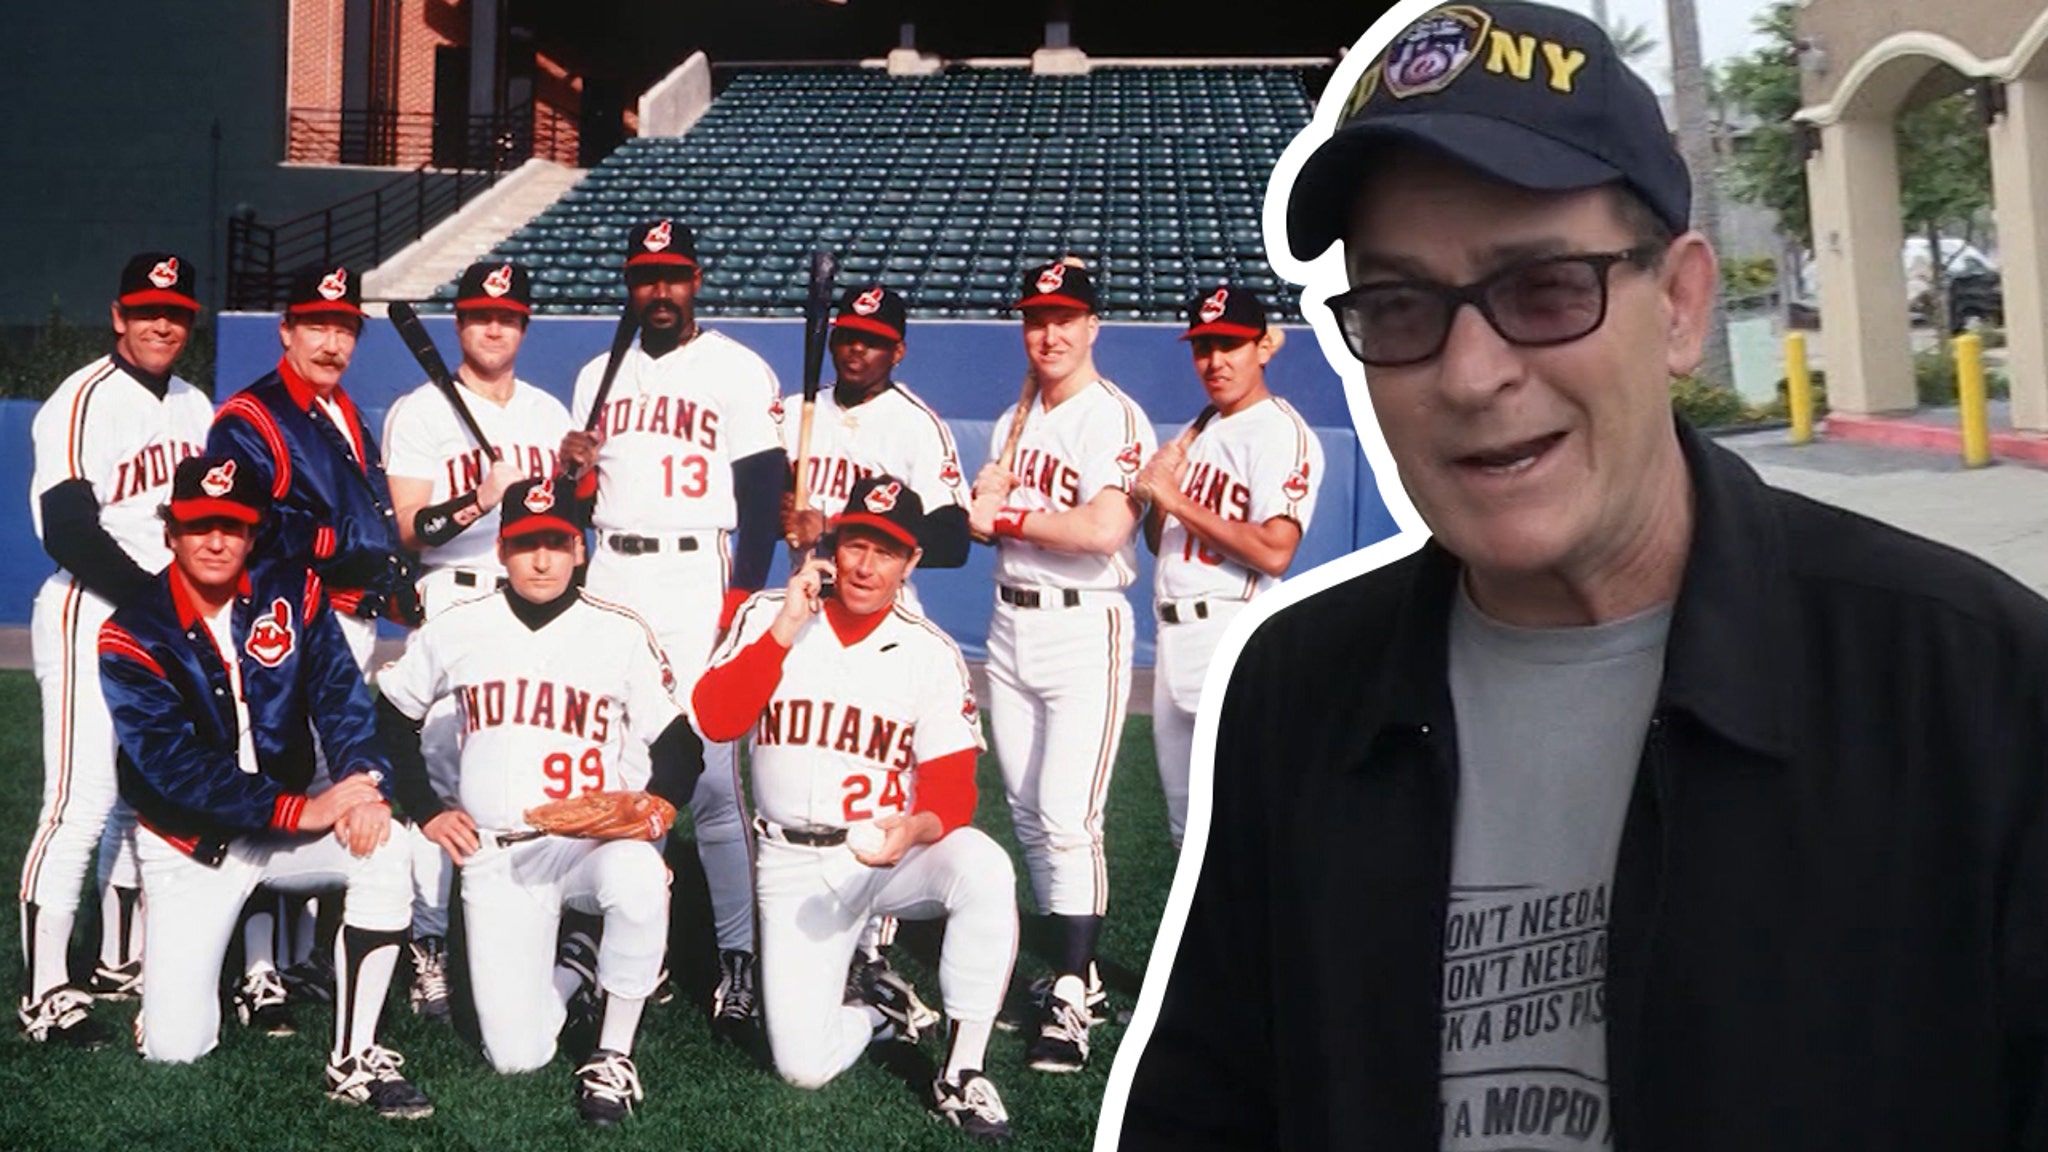 Major League 3' could happen: Original cast is on board, Charlie Sheen says  